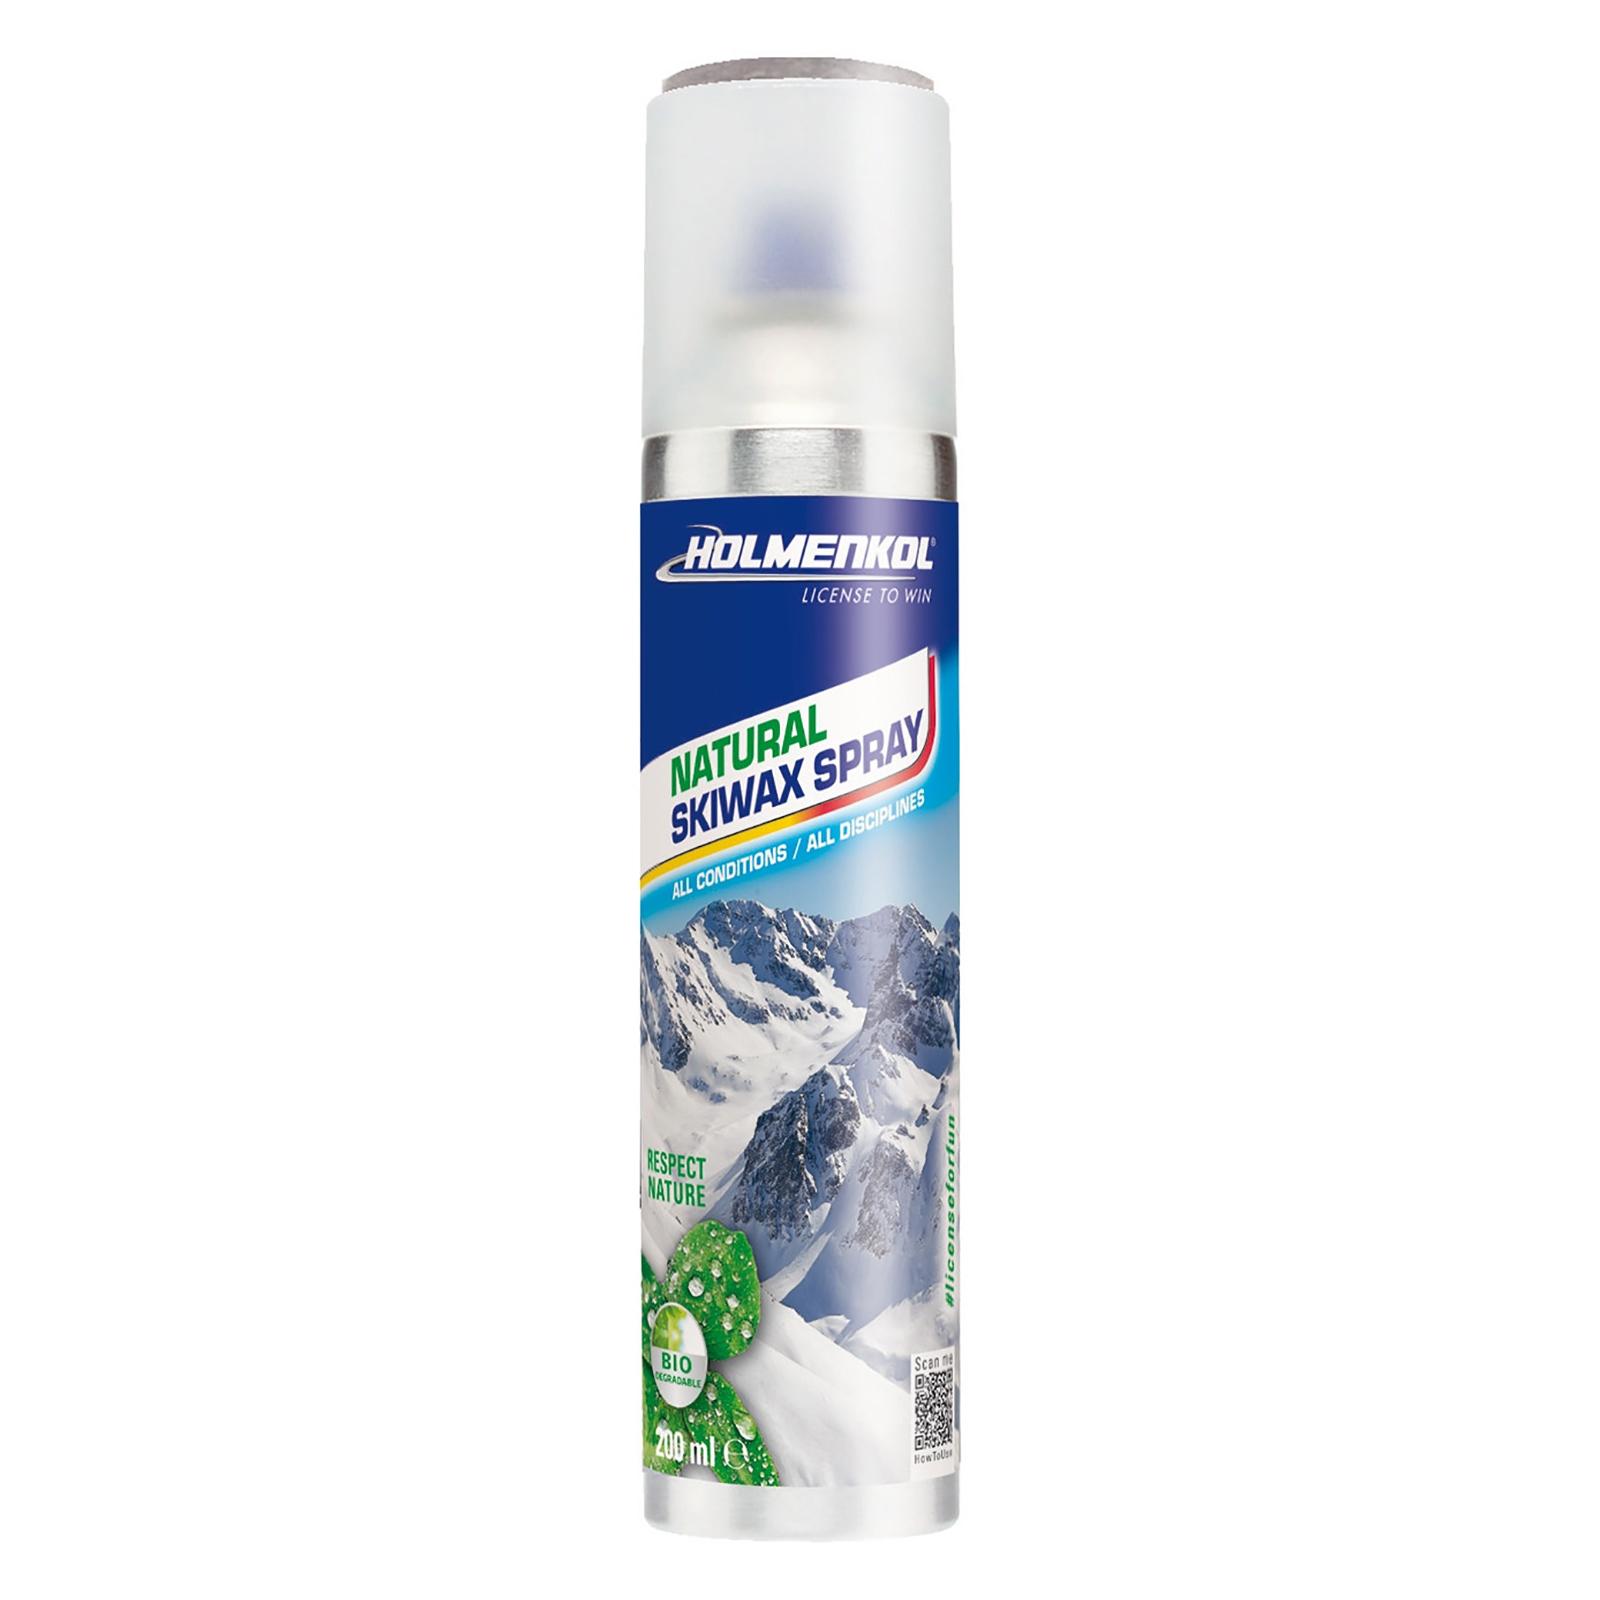 Holmenkol Natural Skiwax Spray